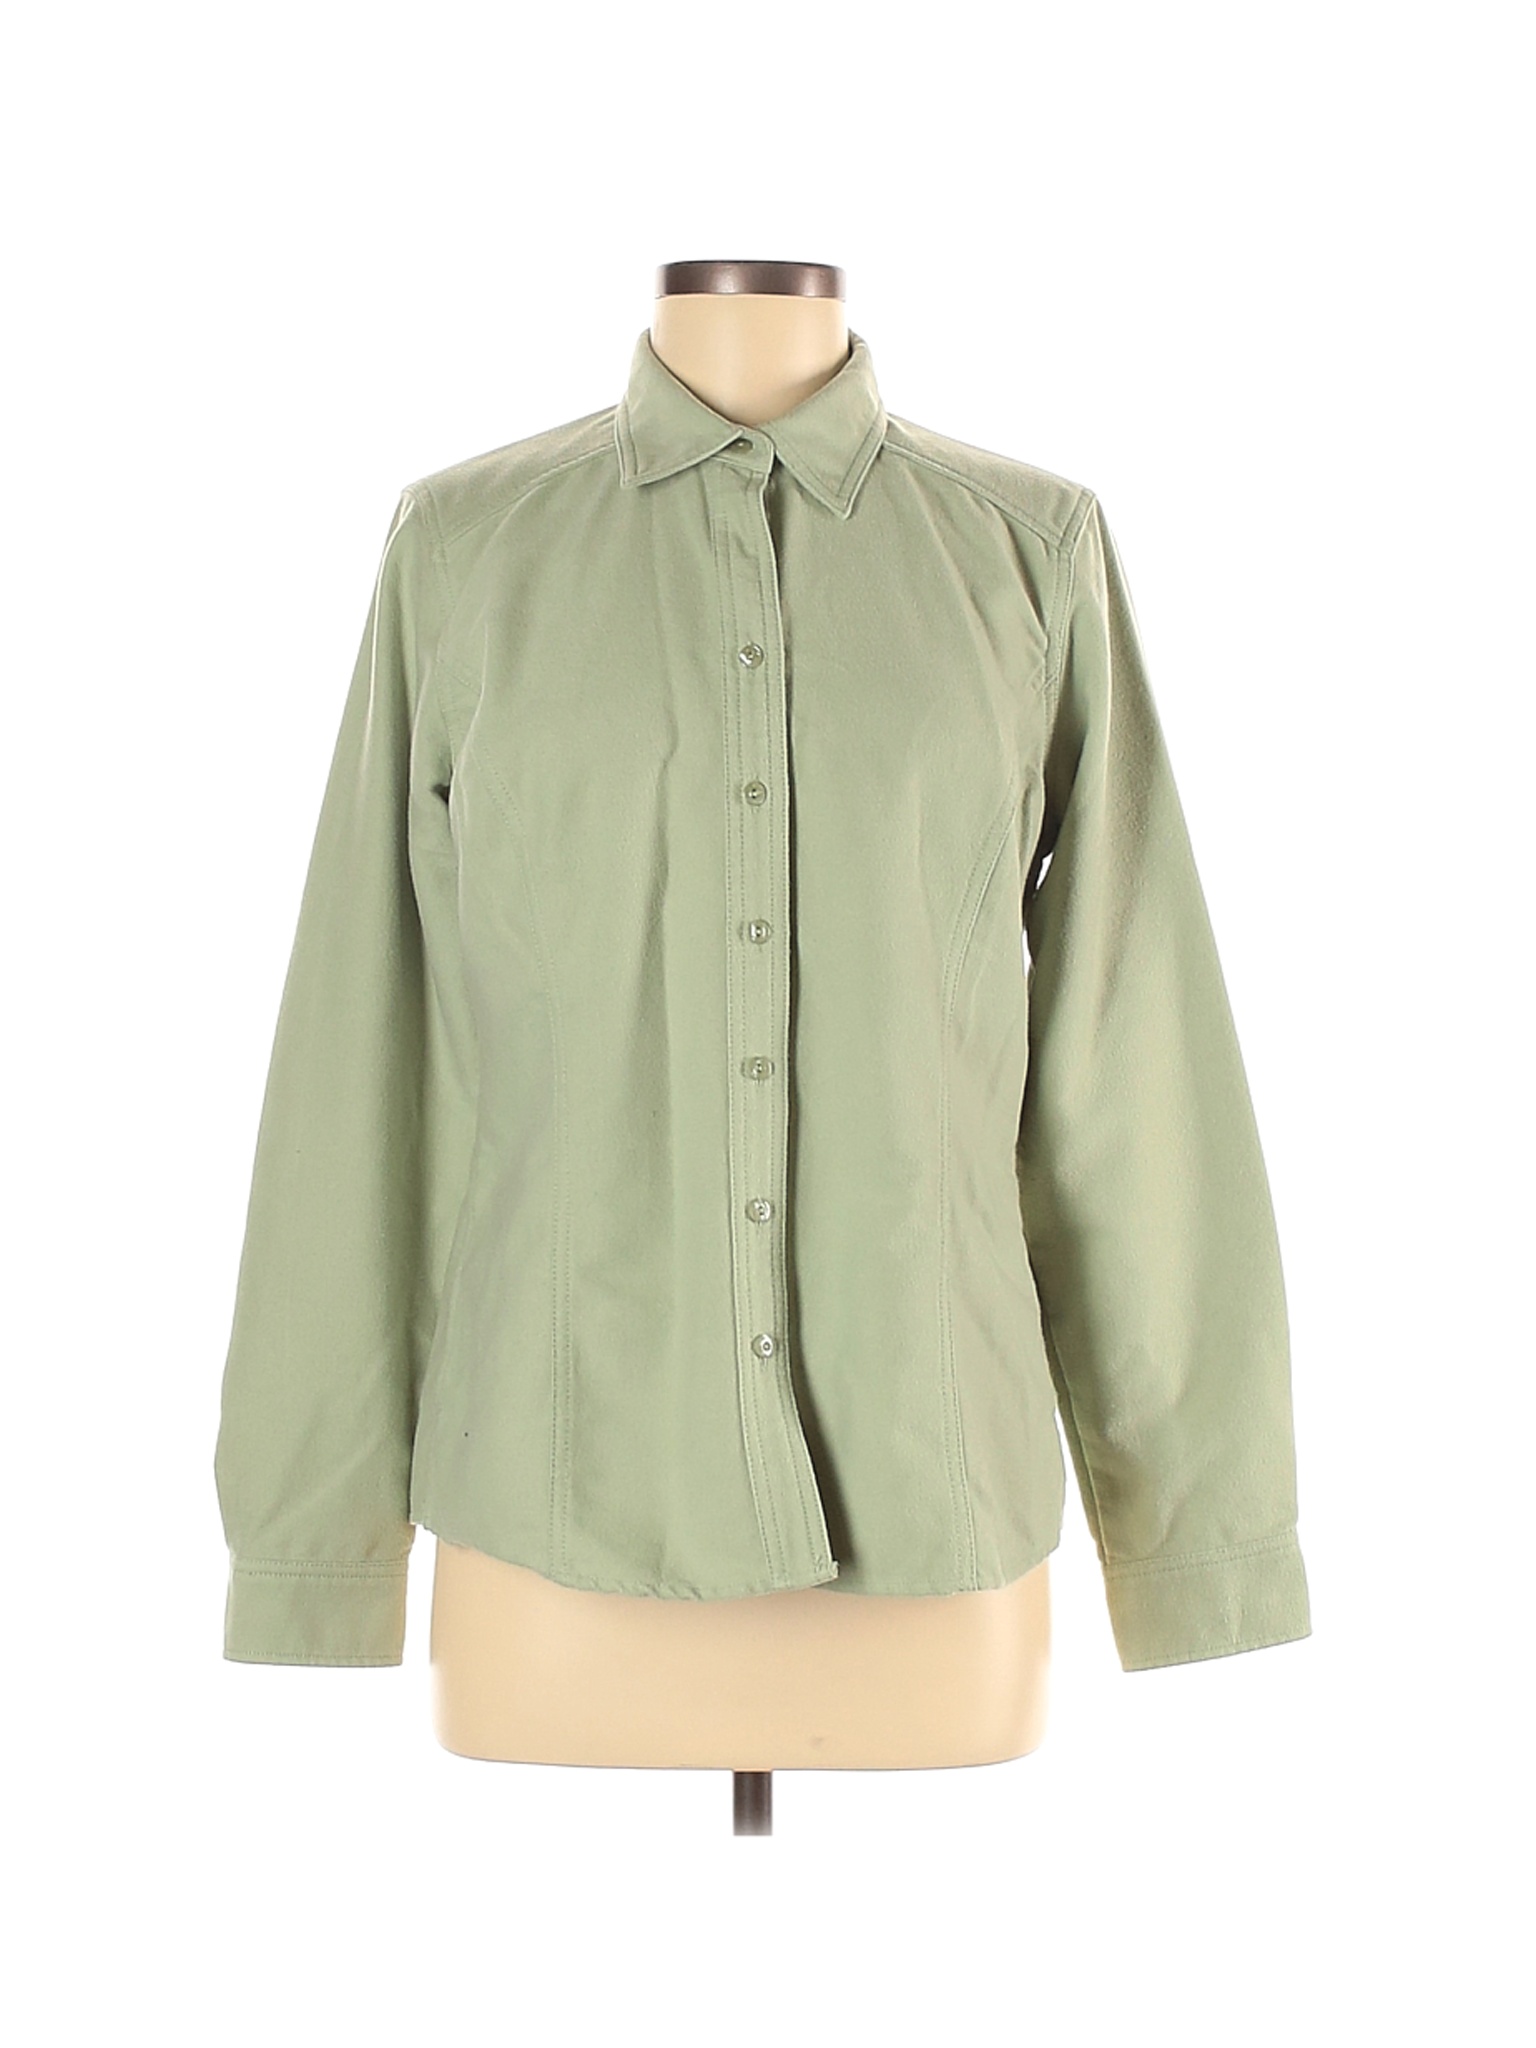 Eddie Bauer Women Green Long Sleeve Blouse M | eBay